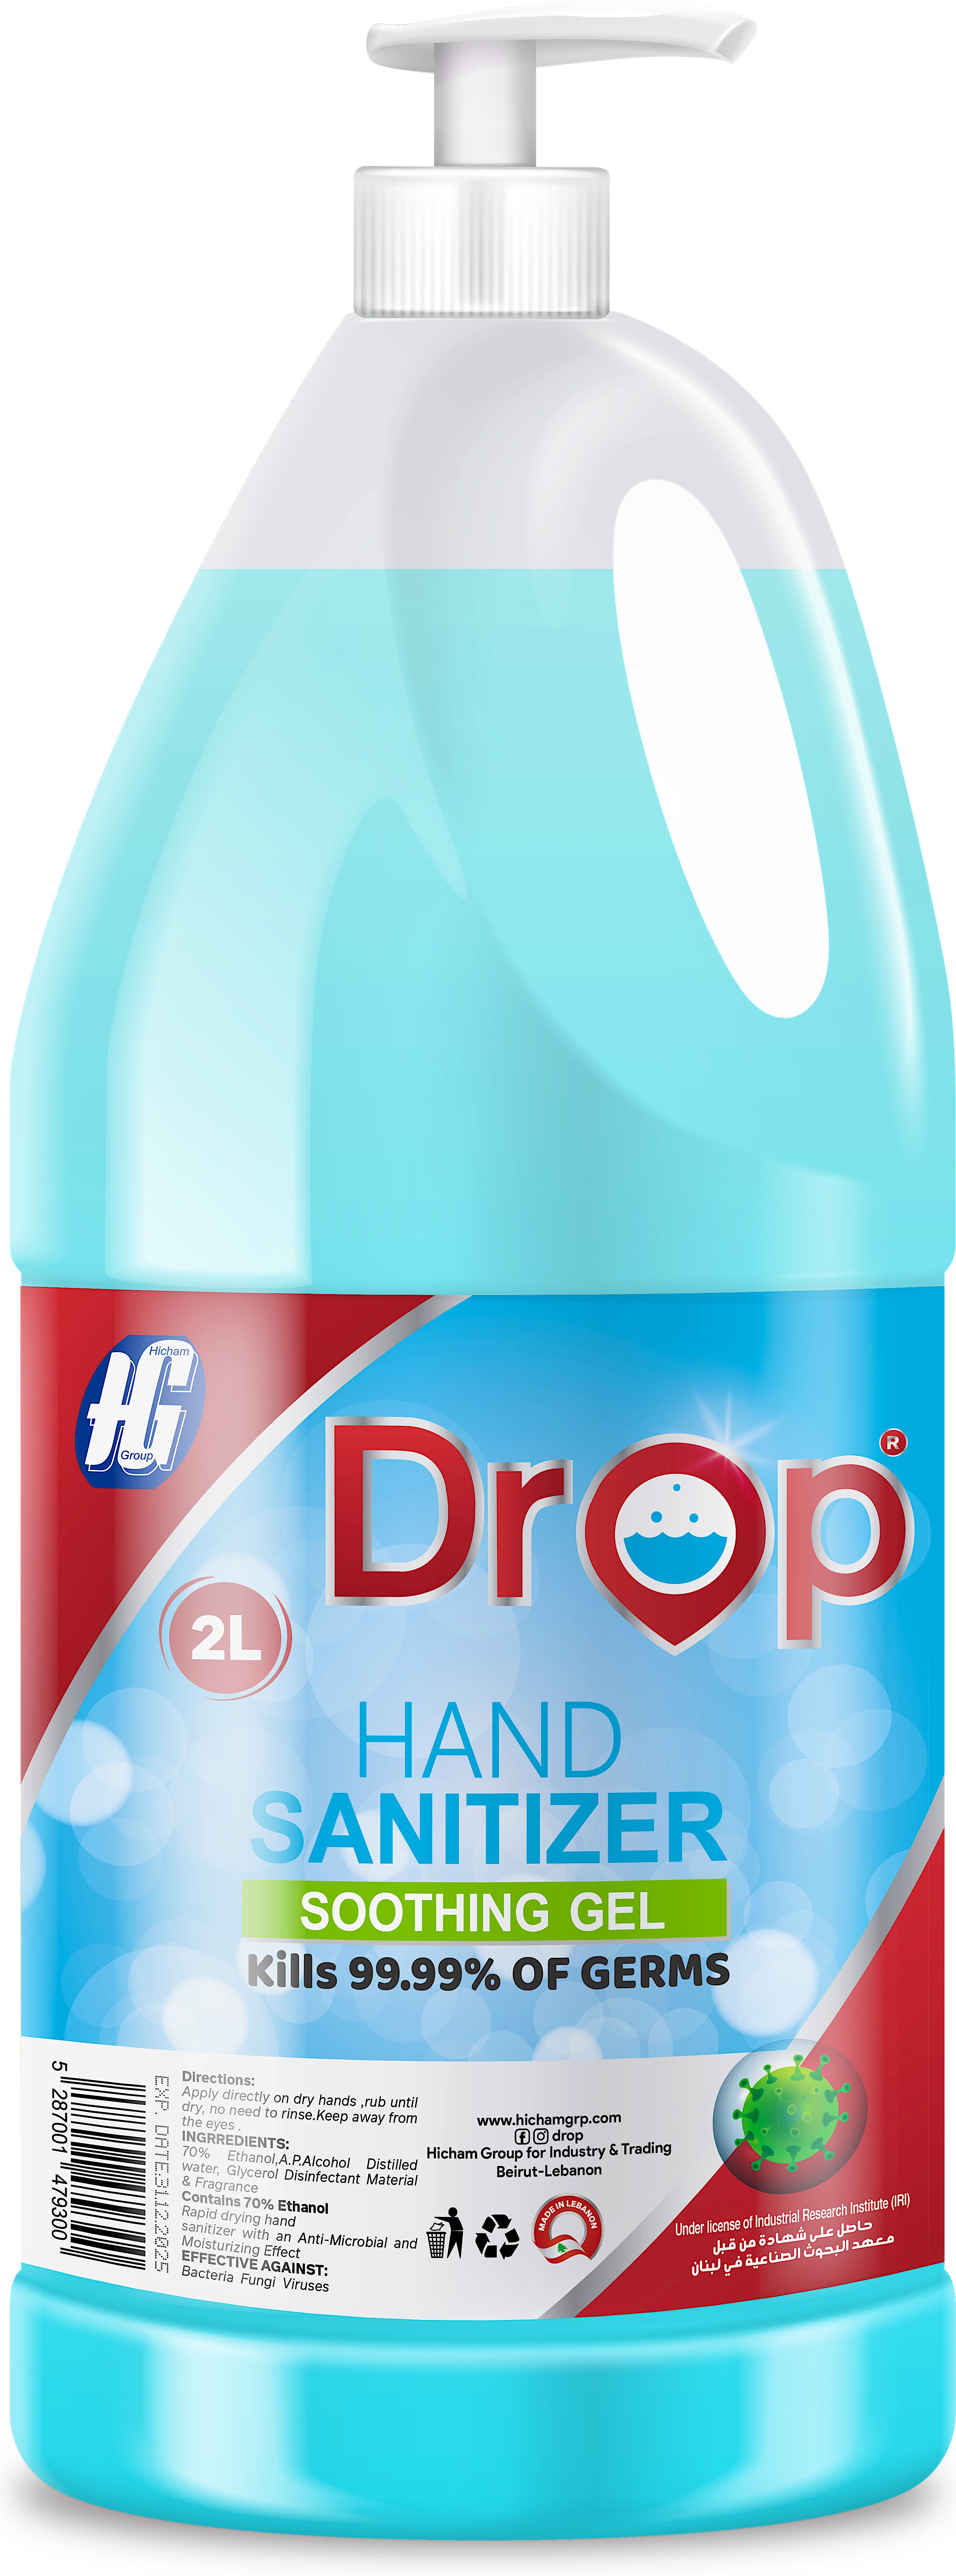 Drop Hand Sanitizer Soothing Gel 2 L